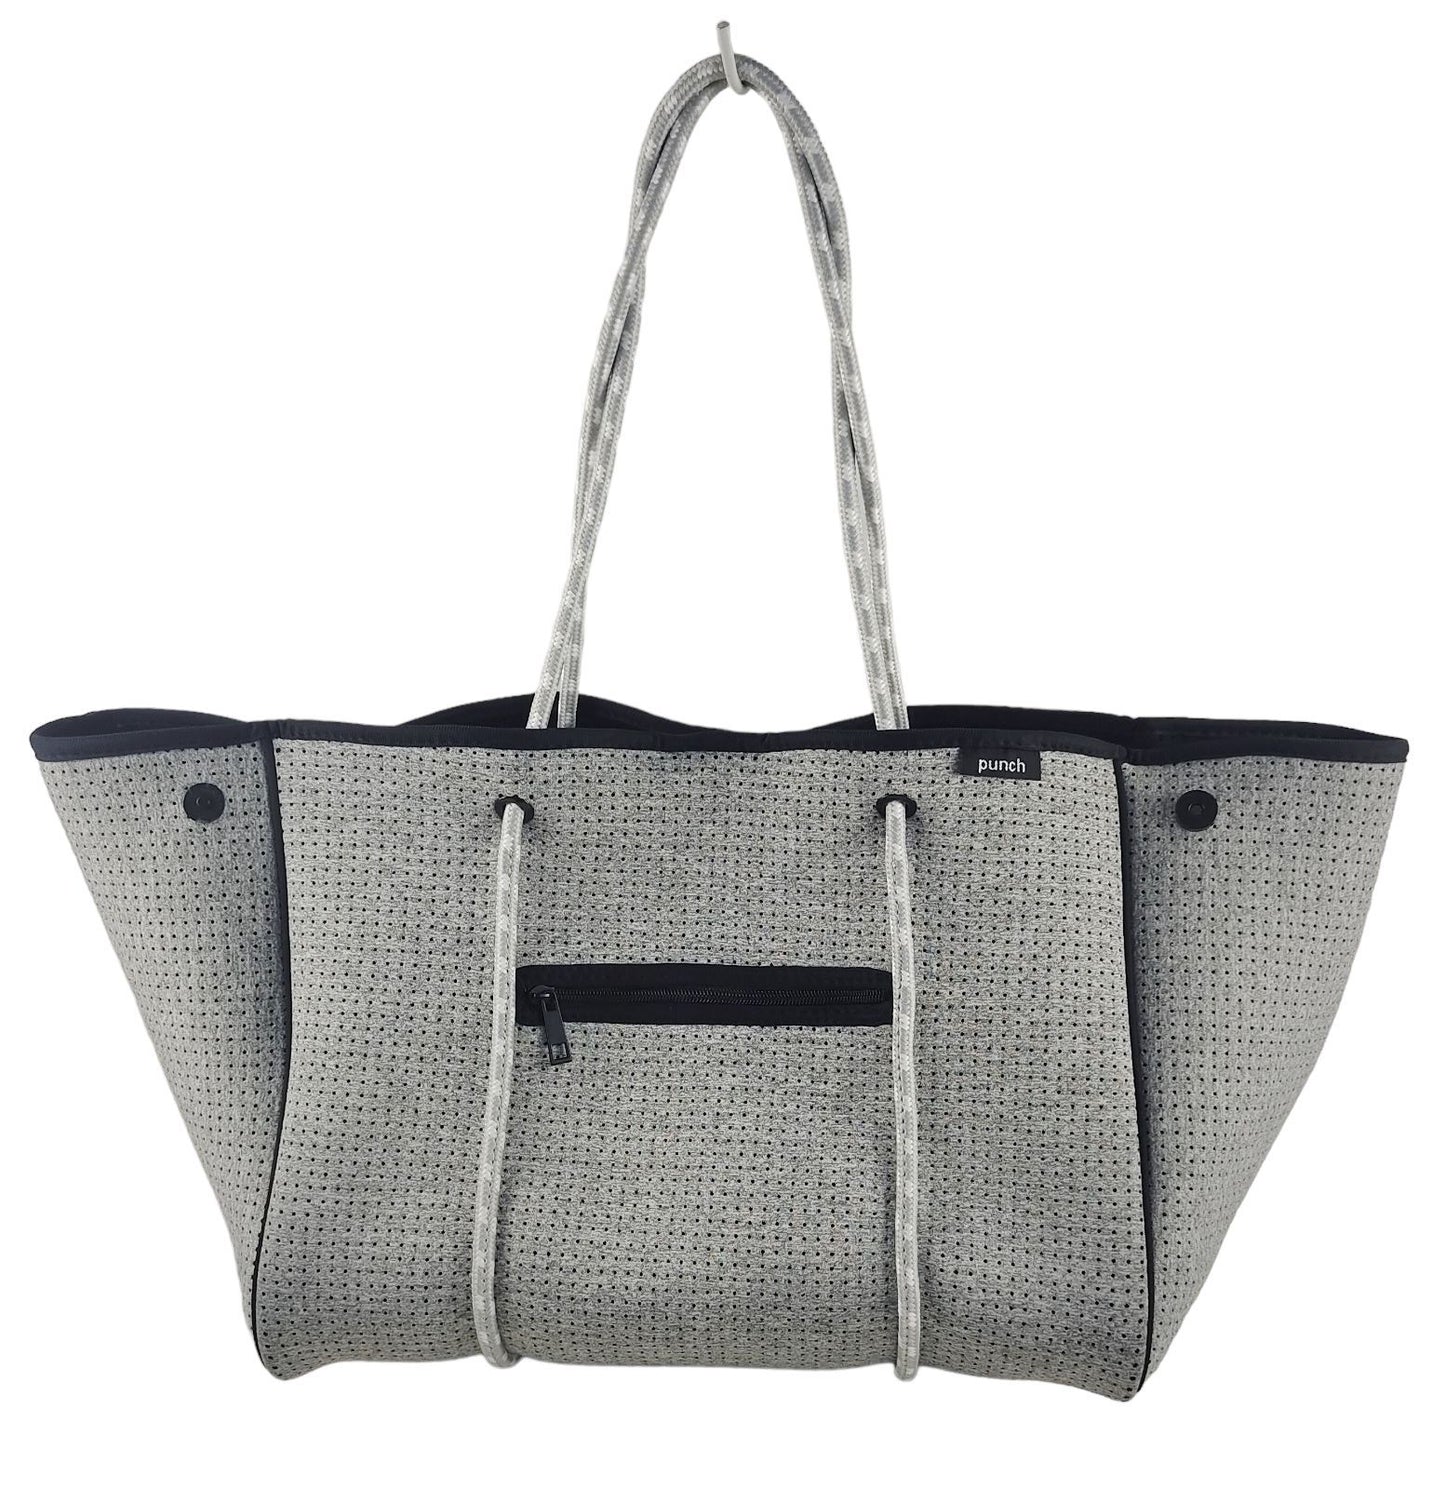 neoprene urban zip tote bag - mélange grey